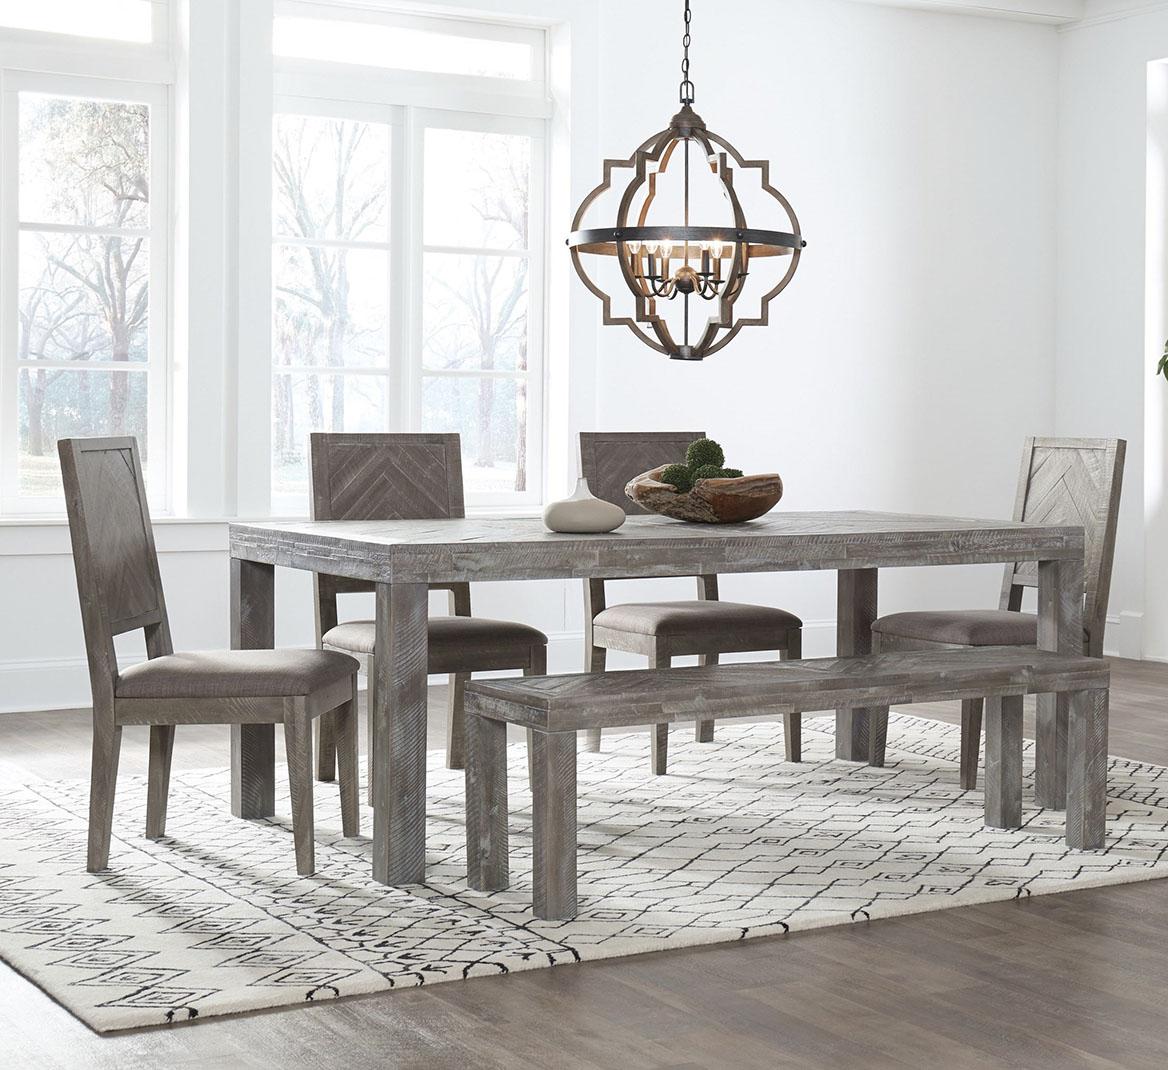 Contemporary, Rustic Dining Table Set HERRINGBONE 5QS360-6PC in Latte, Linen Fabric